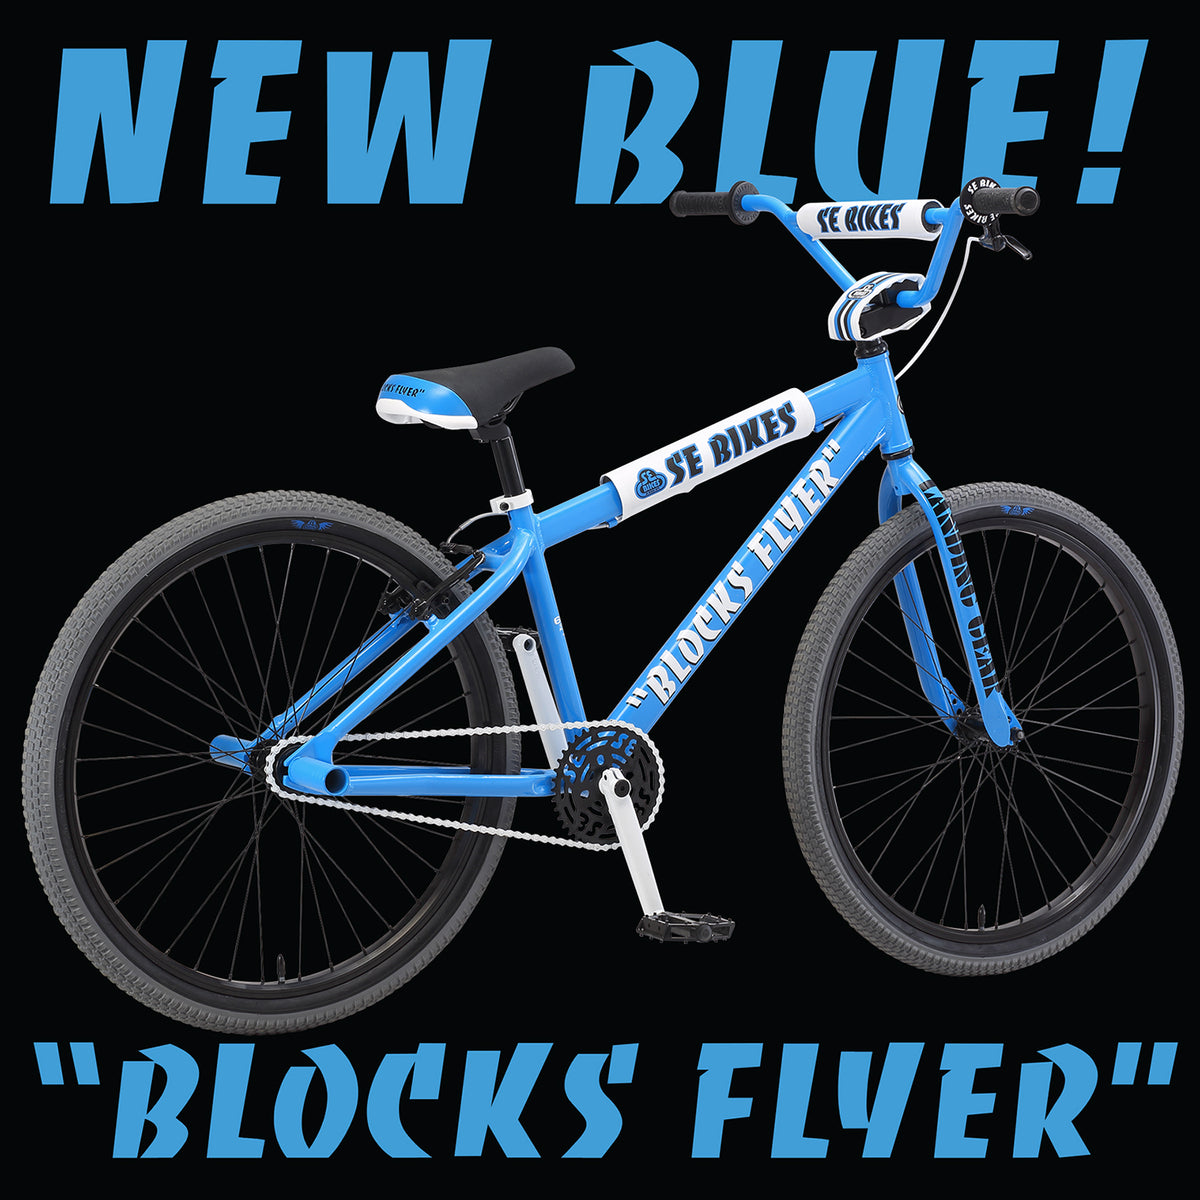 Blocks flyer se bike